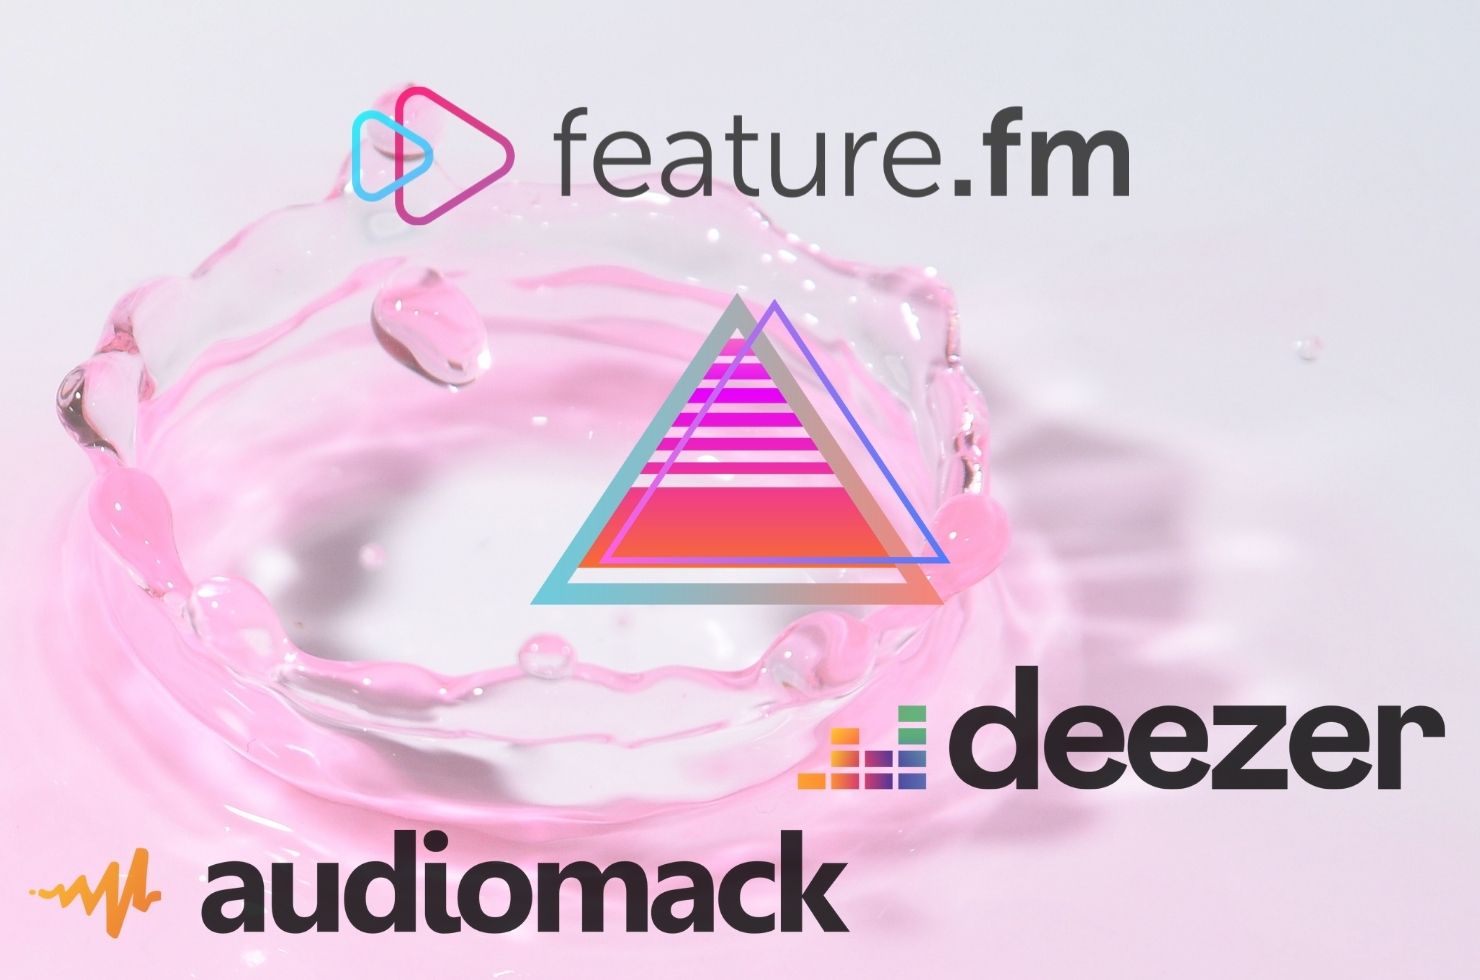 Feature.fm Deezer Audiomack